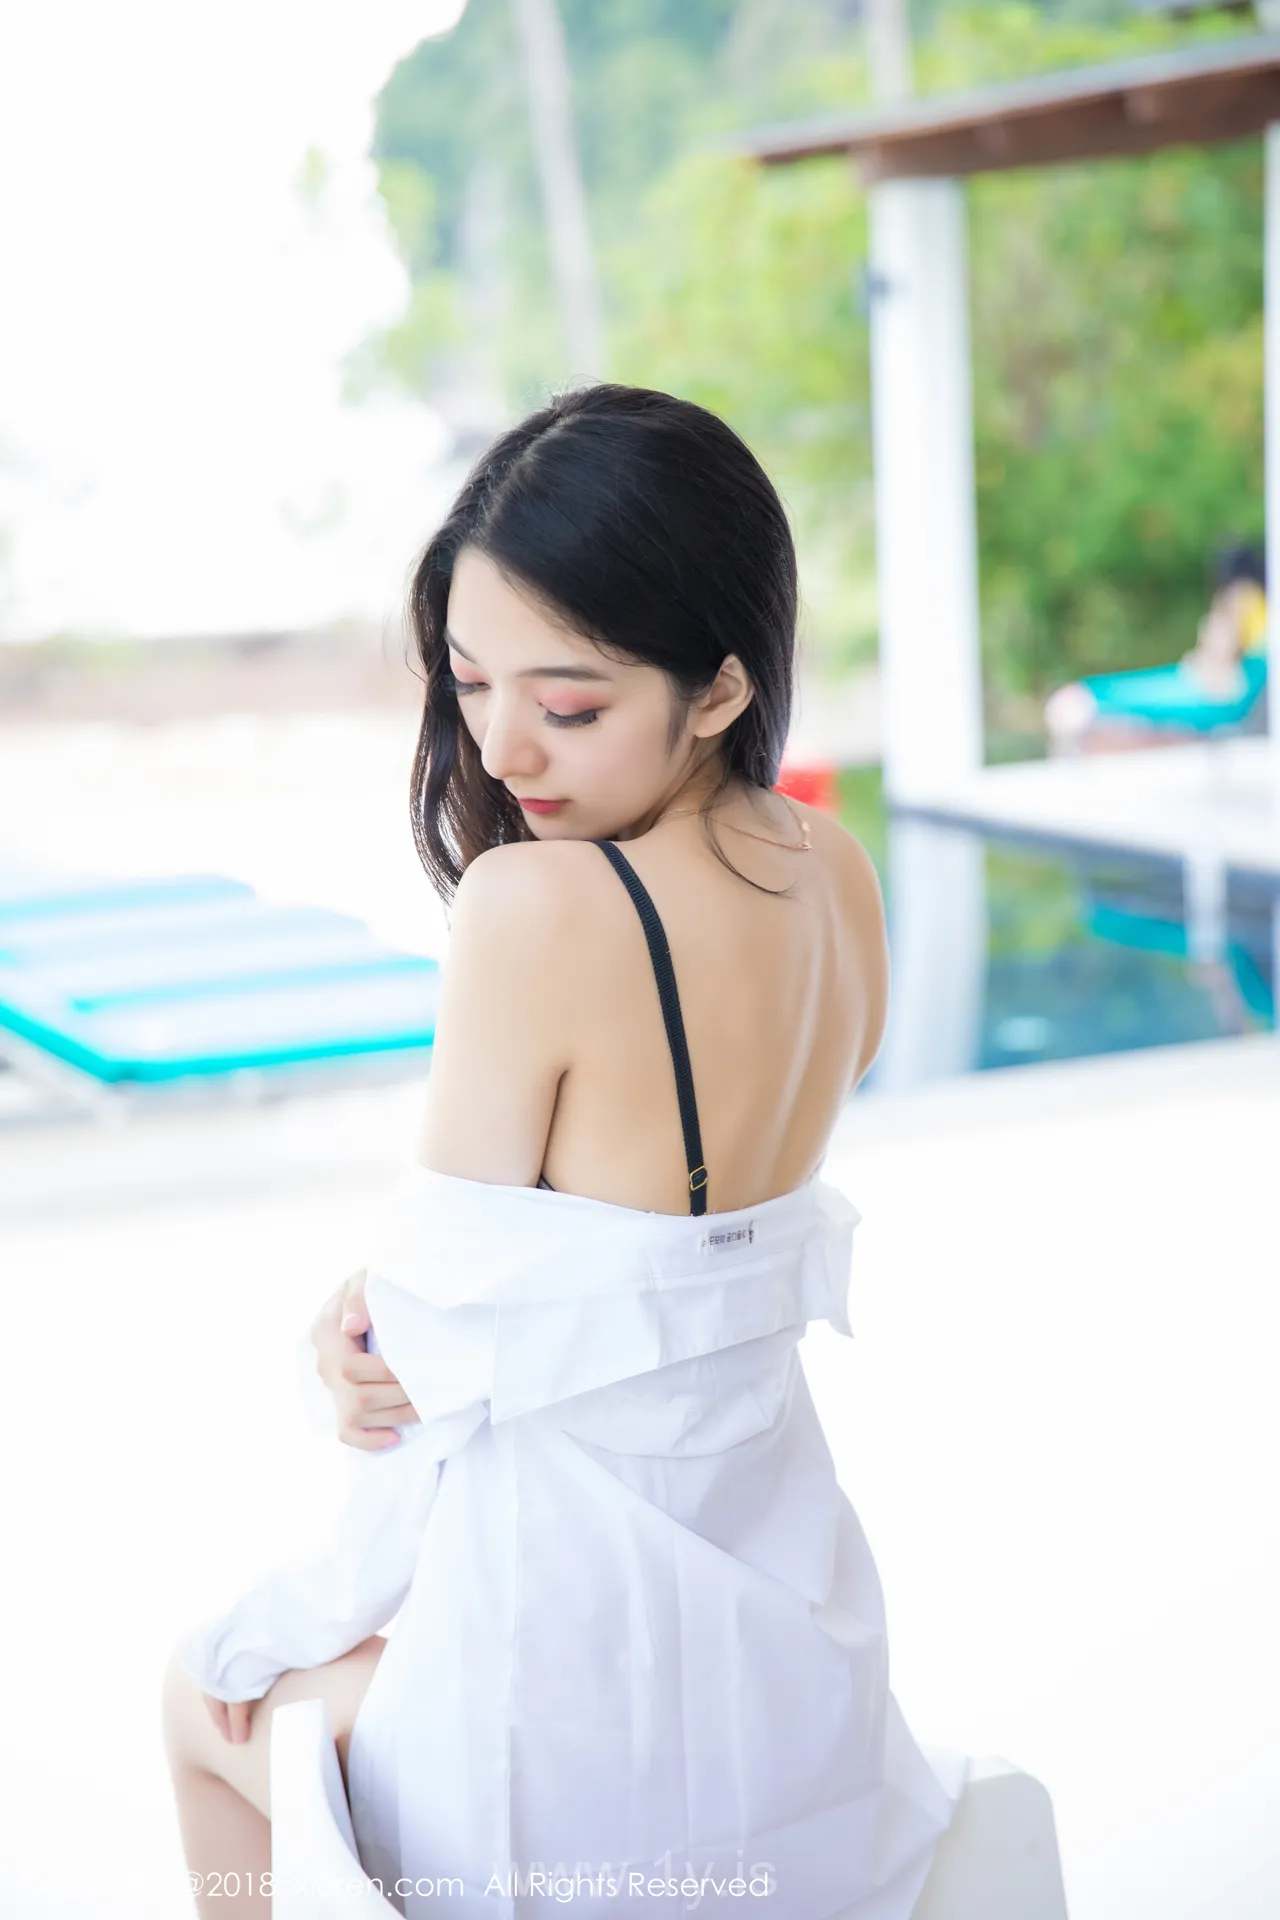 XIUREN(秀人网) NO.962 Gorgeous & Extraordinary Asian Belle 小热巴